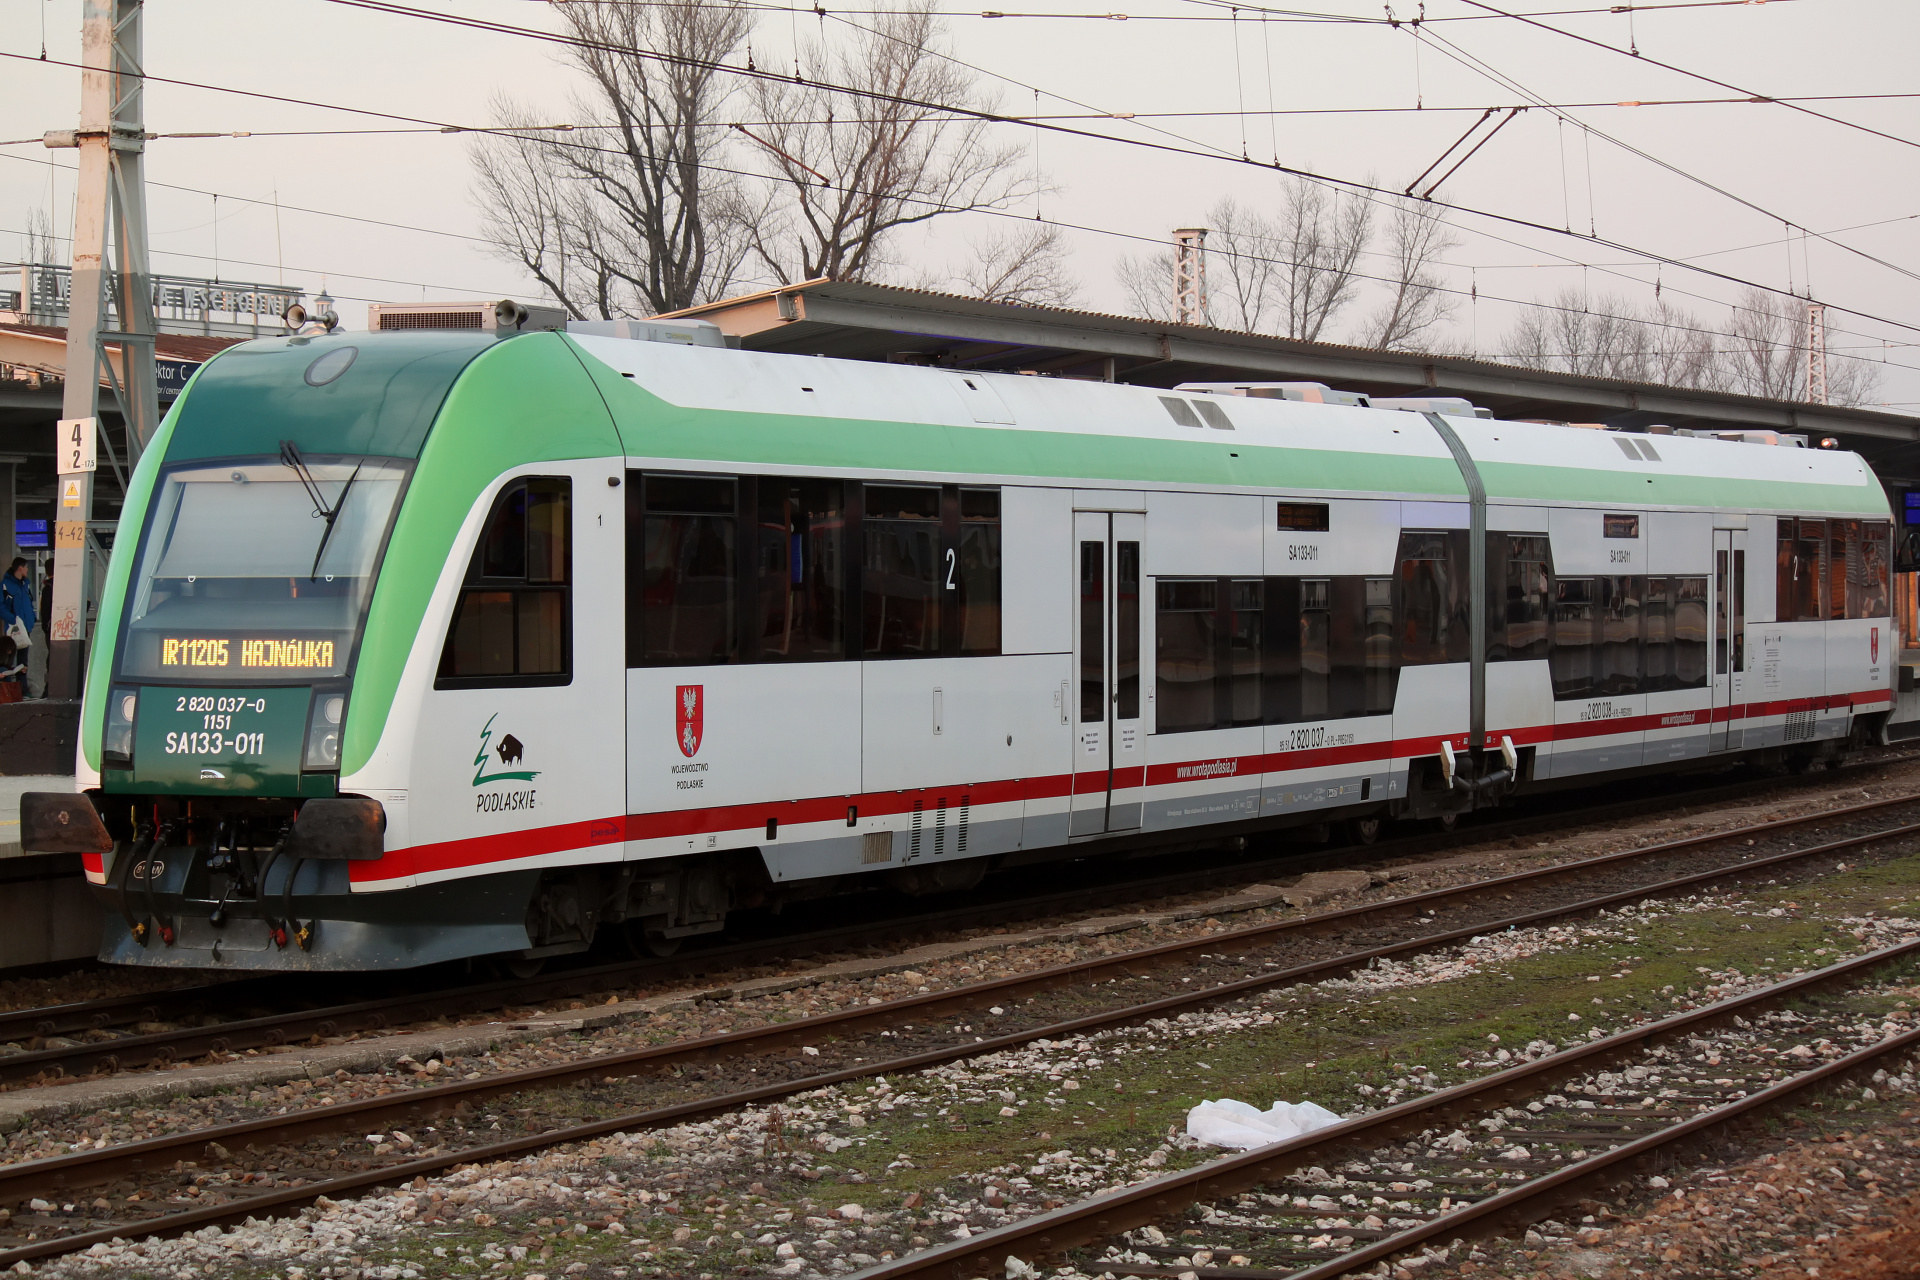 Pesa 218Mc SA133-011 (Vehicles » Trains and Locomotives)